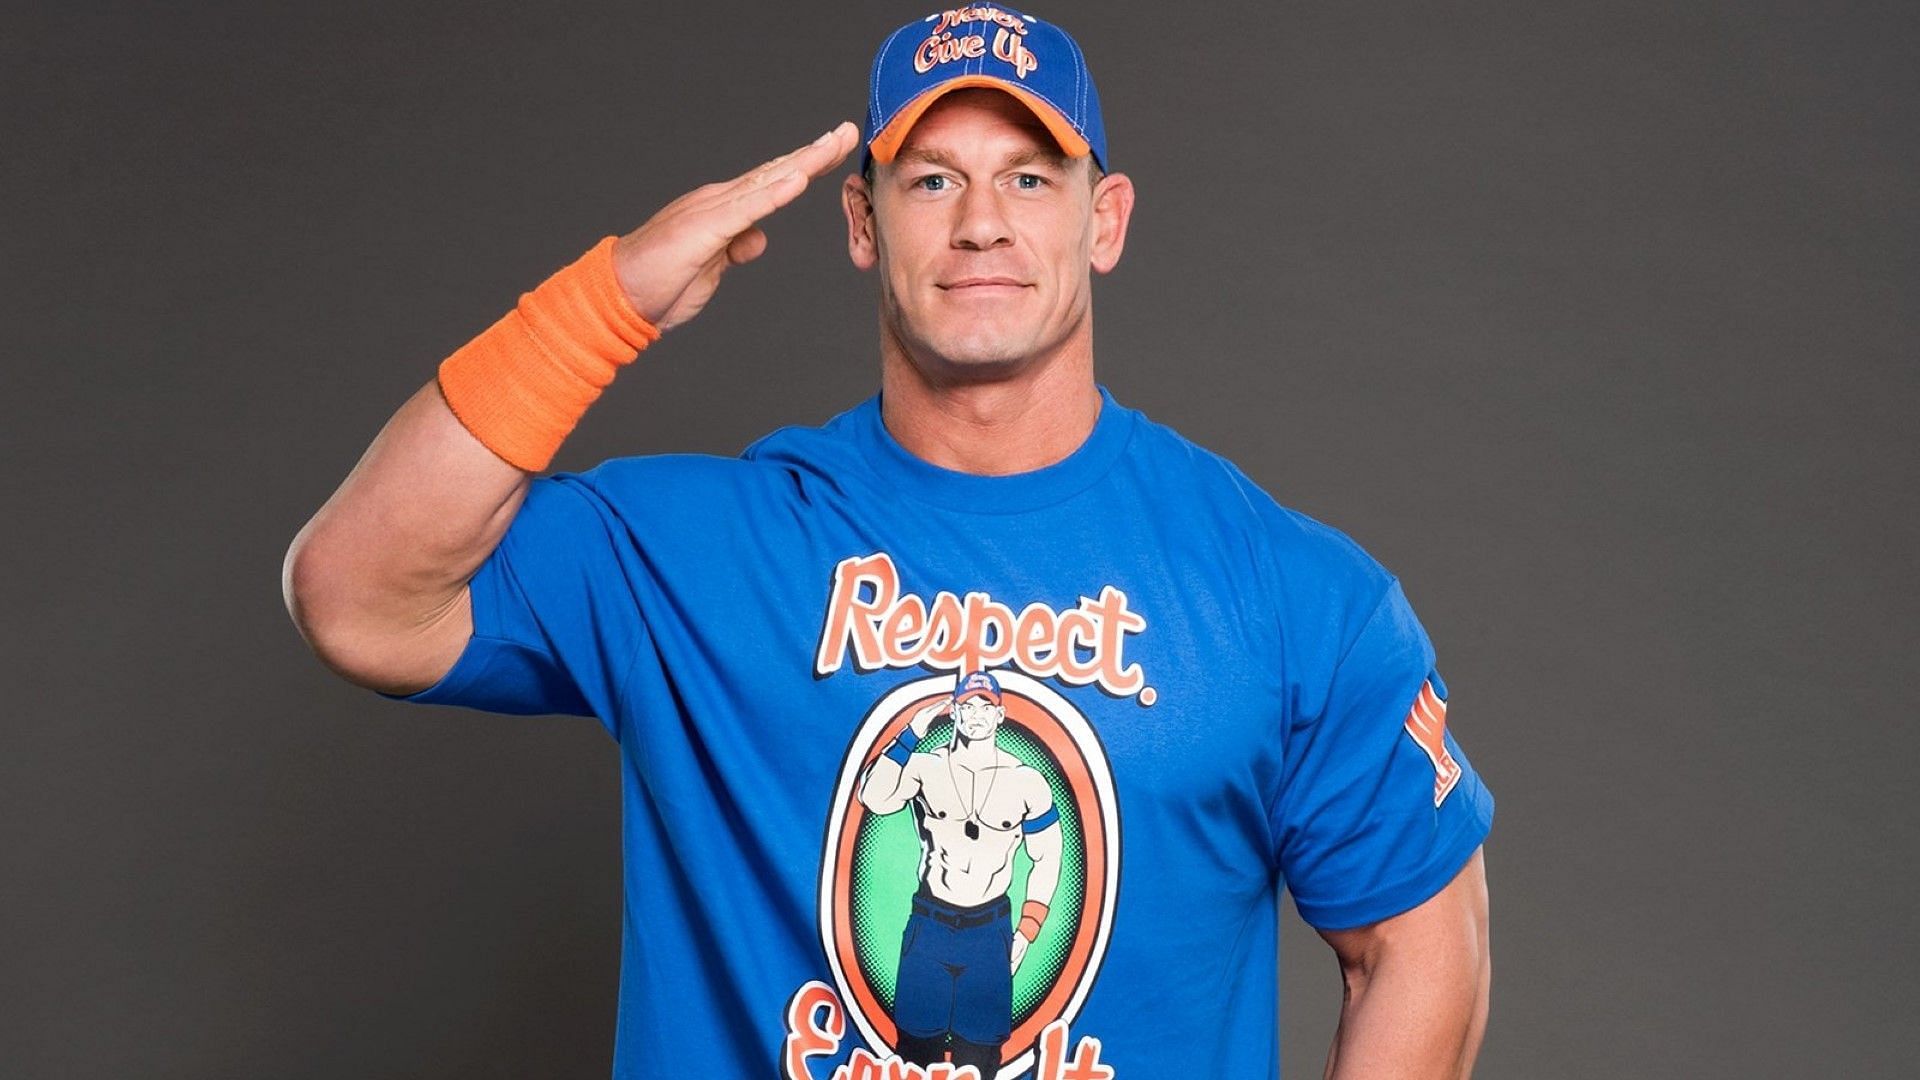 John Cena salutes backstage at a WWE photo shoot